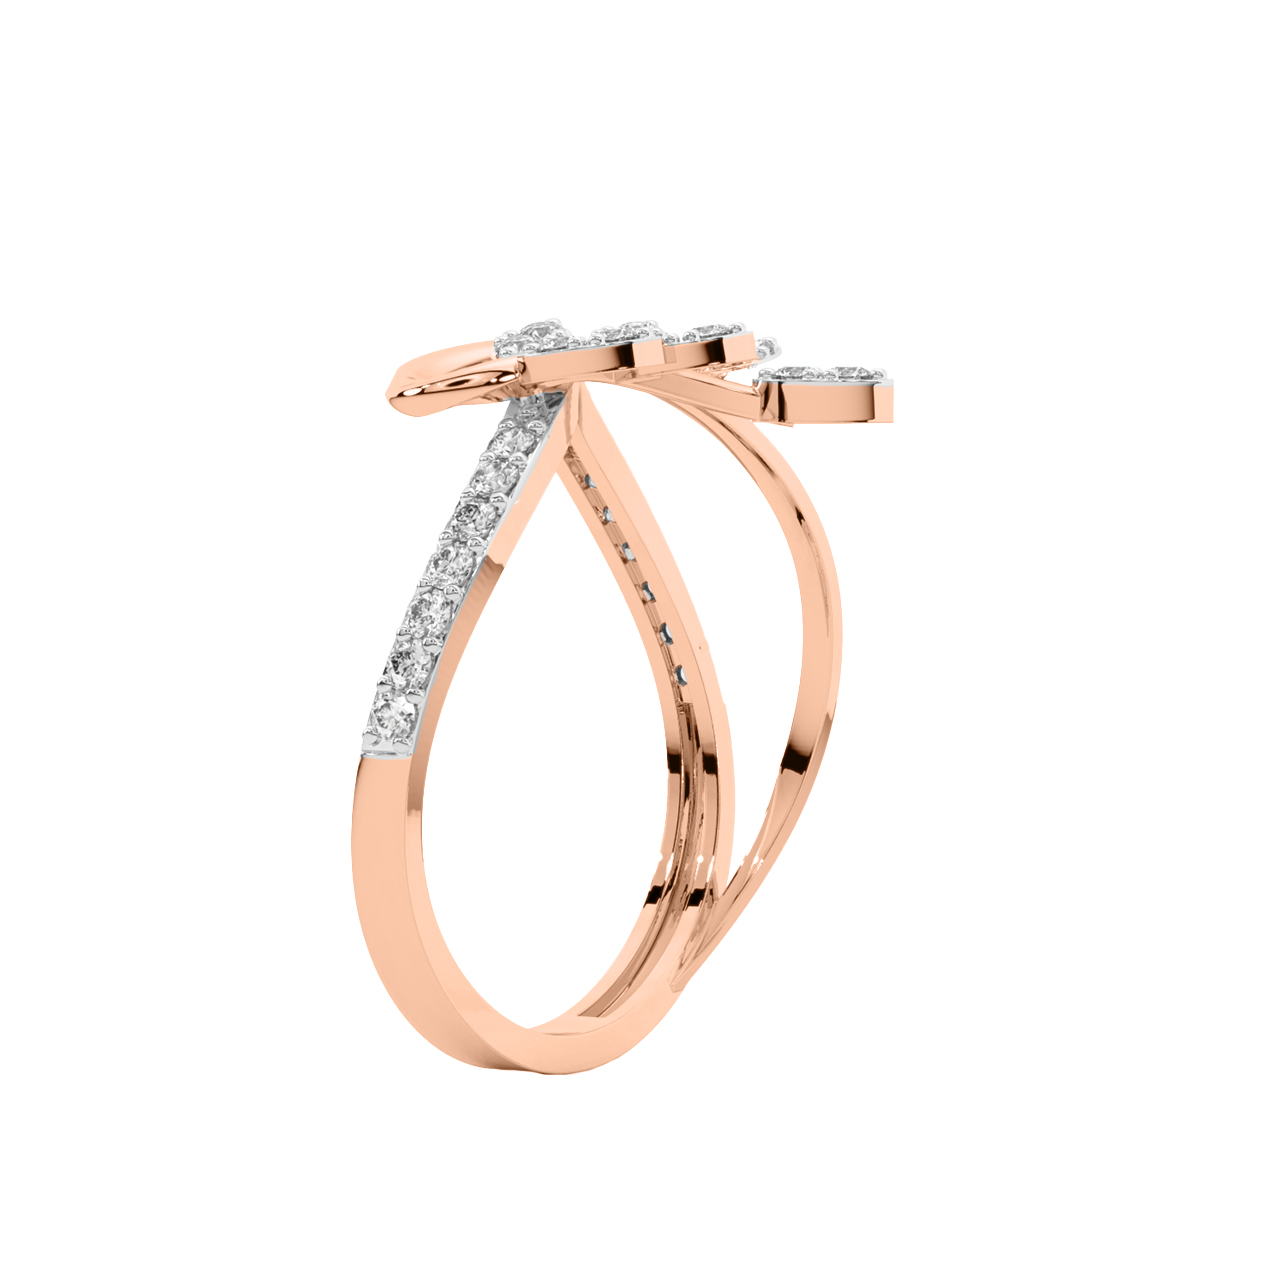 Designer Leaf Diamond Engagement Ring